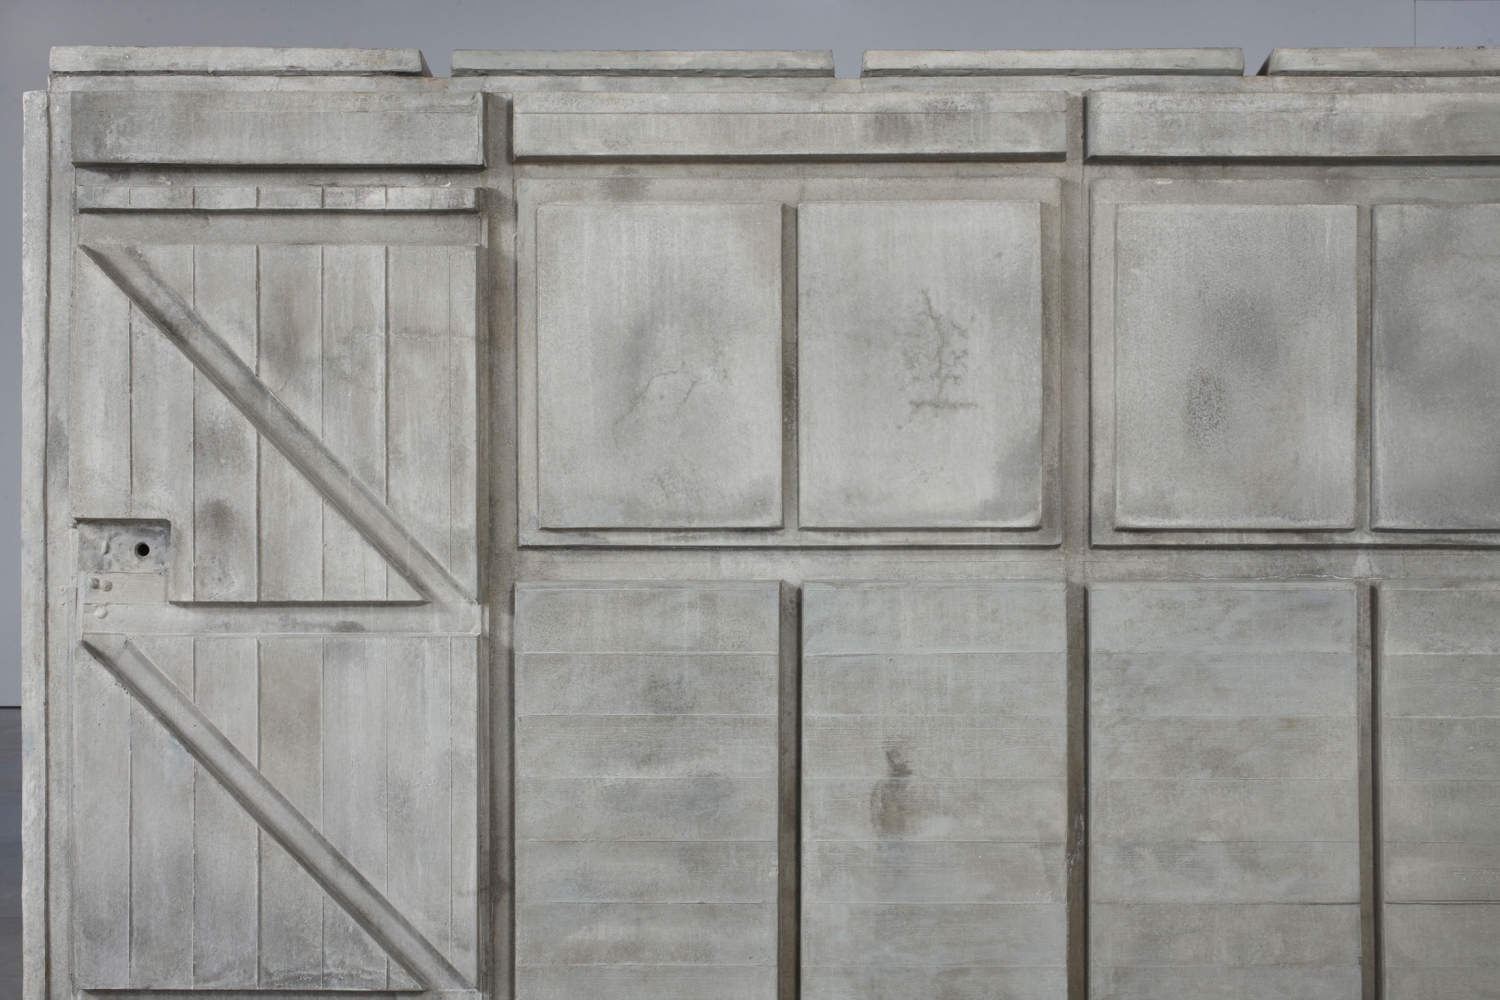 Rachel Whiteread
Detached III, 2012
Detail
Concrete and steel
77 1/8 x 67 11/16 x 115 11/16 inches&amp;nbsp;
(196 x 172 x 294 cm)